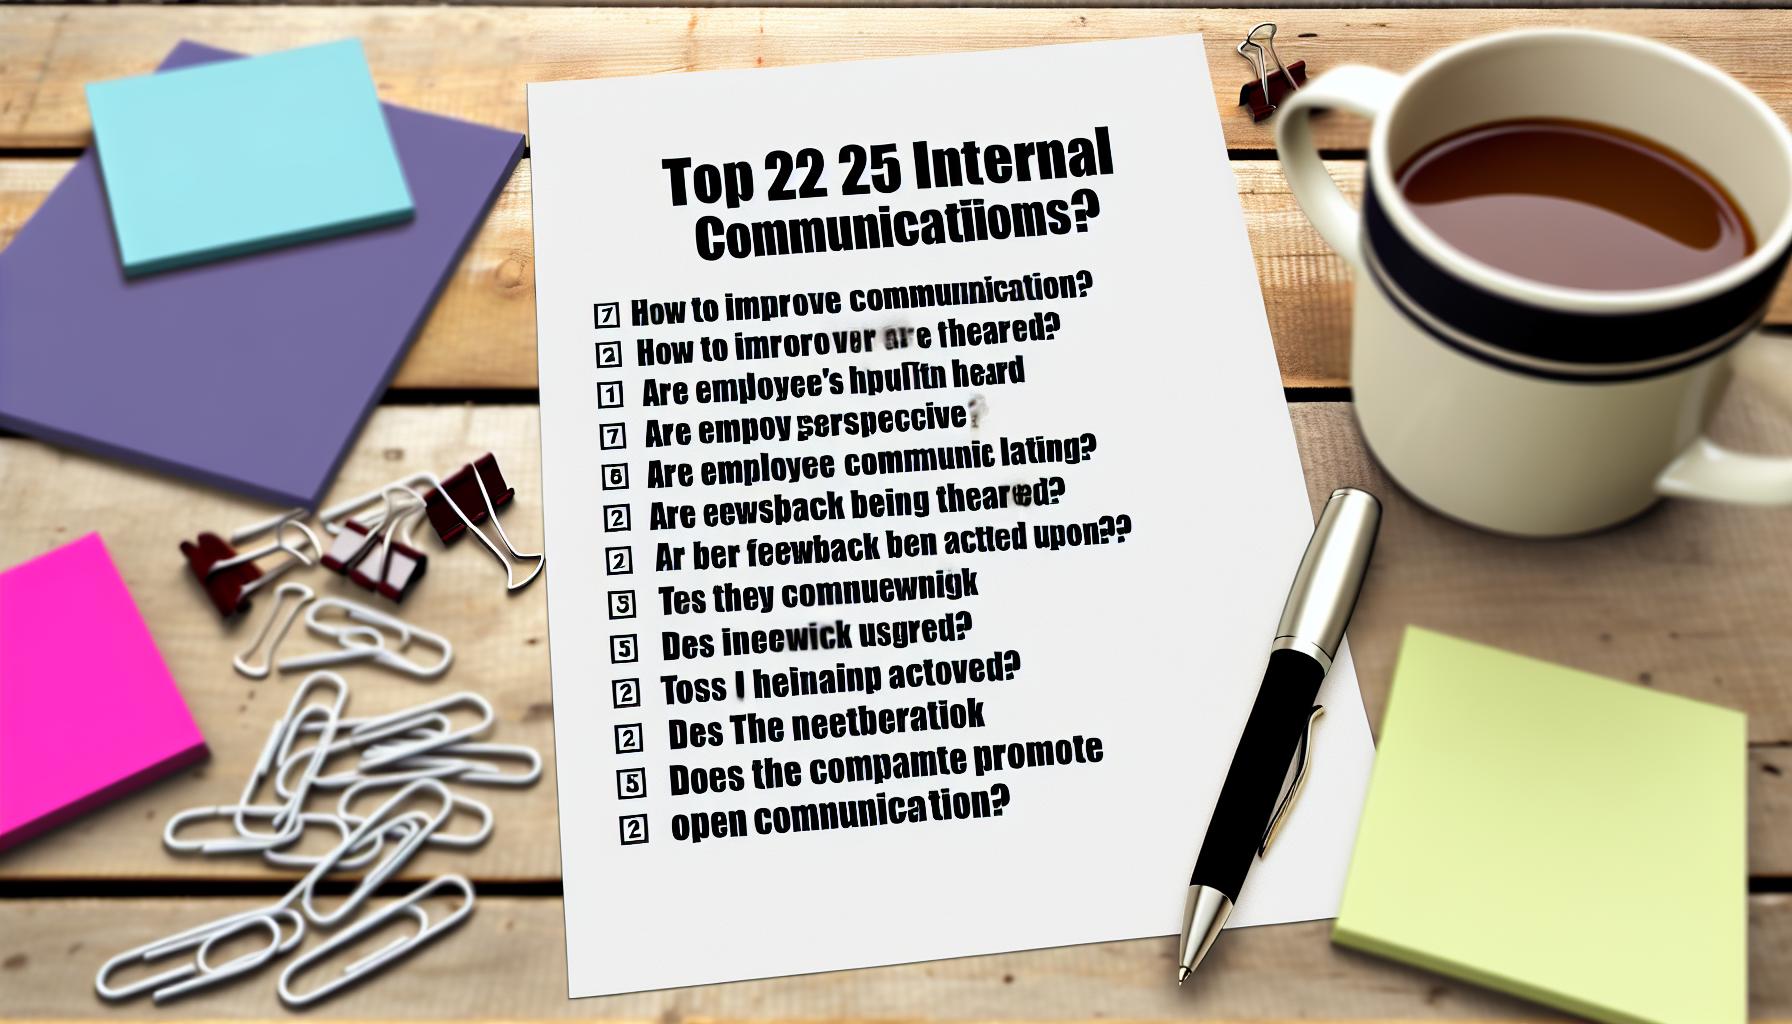 Top 25 internal communications questions